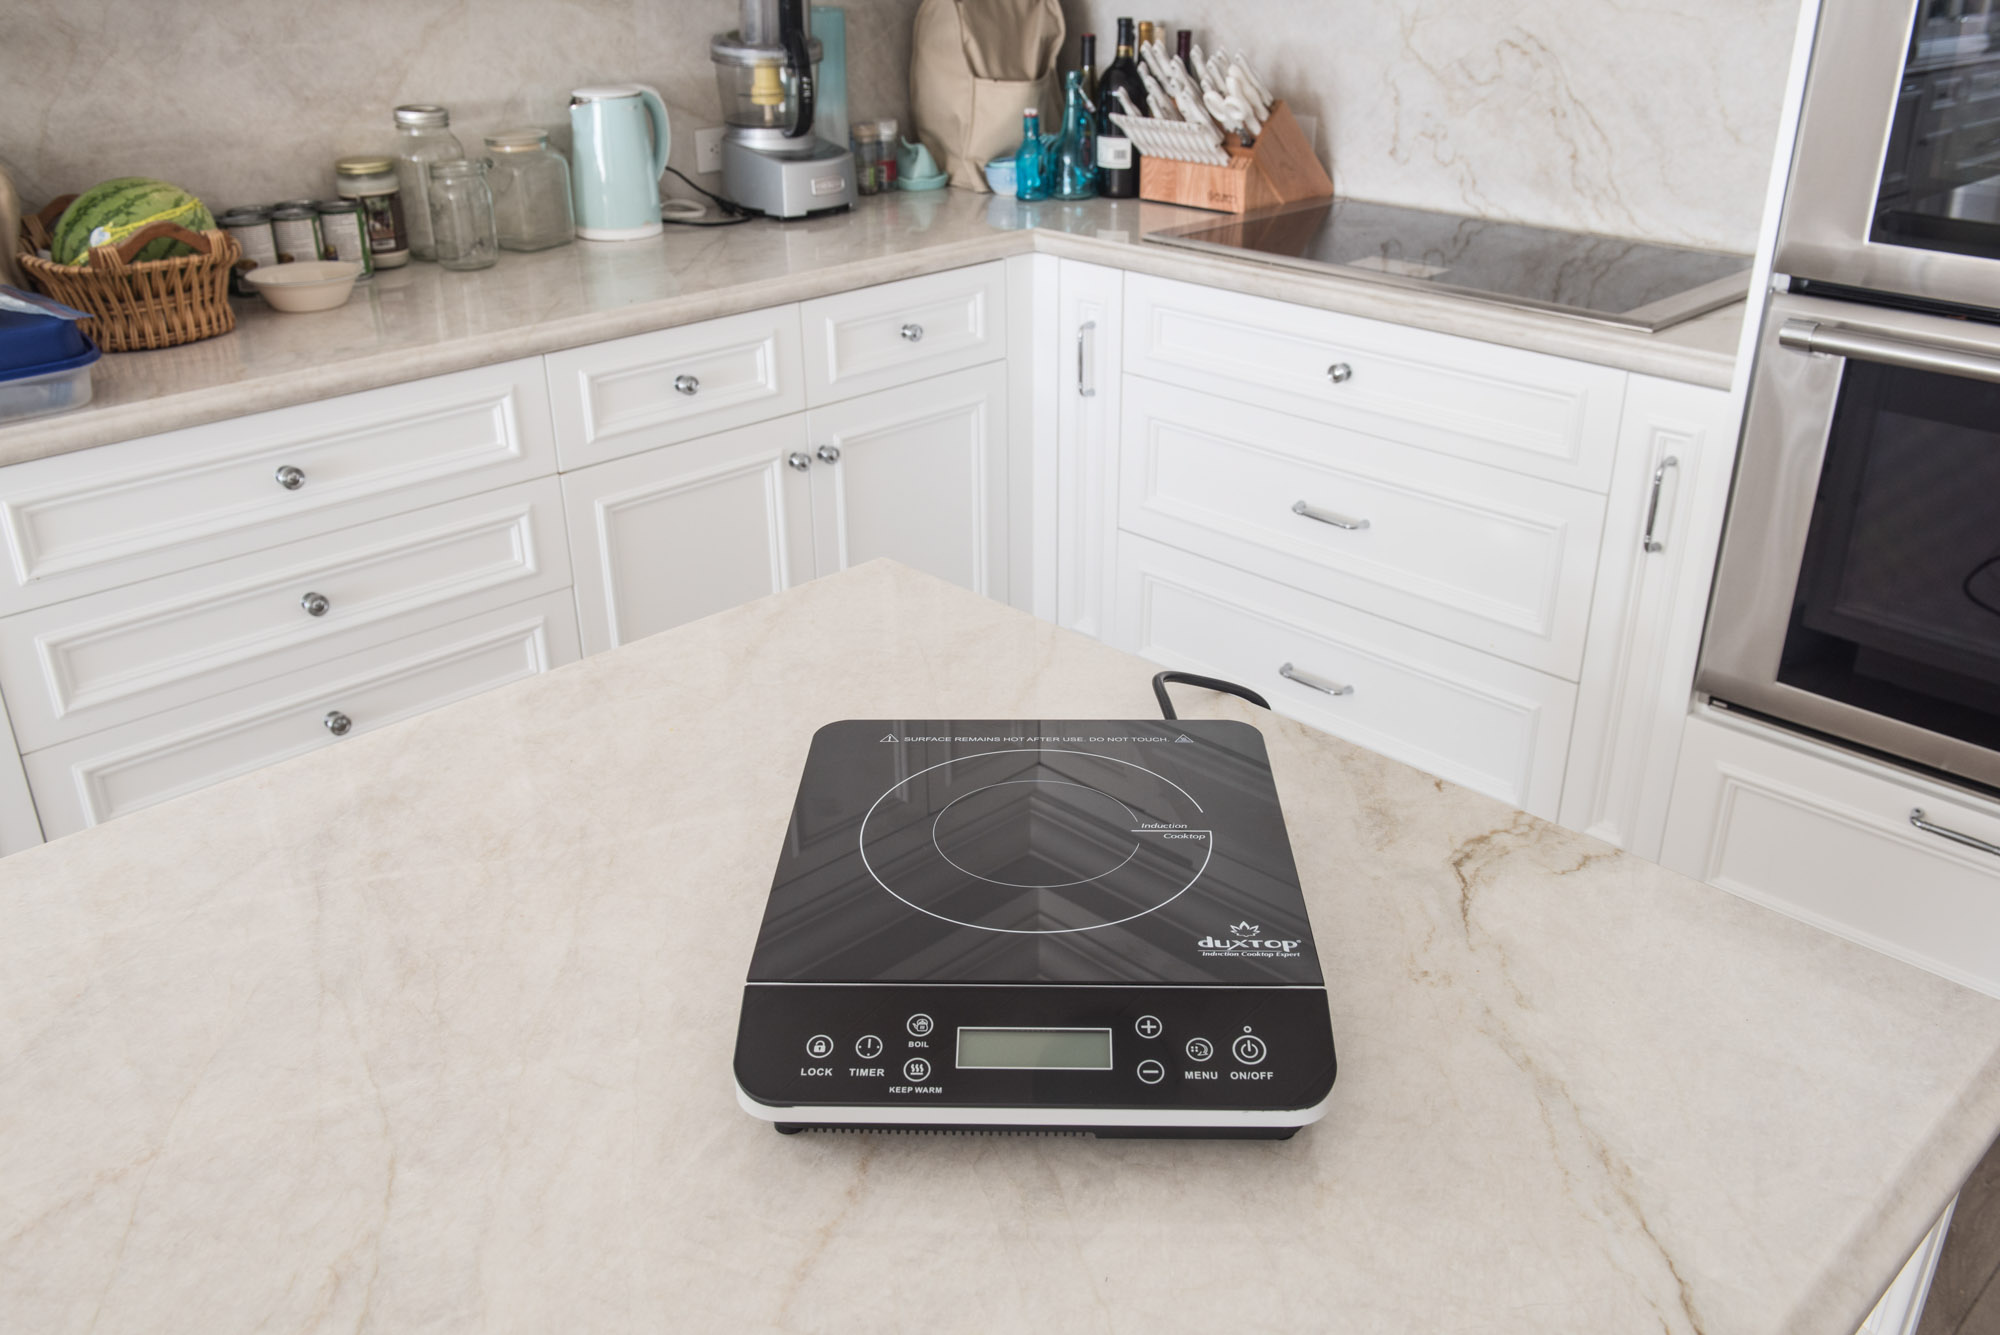 The BEST Portable Induction Cooktop - Duxtop Professional 1800 Watt Burner  Review 